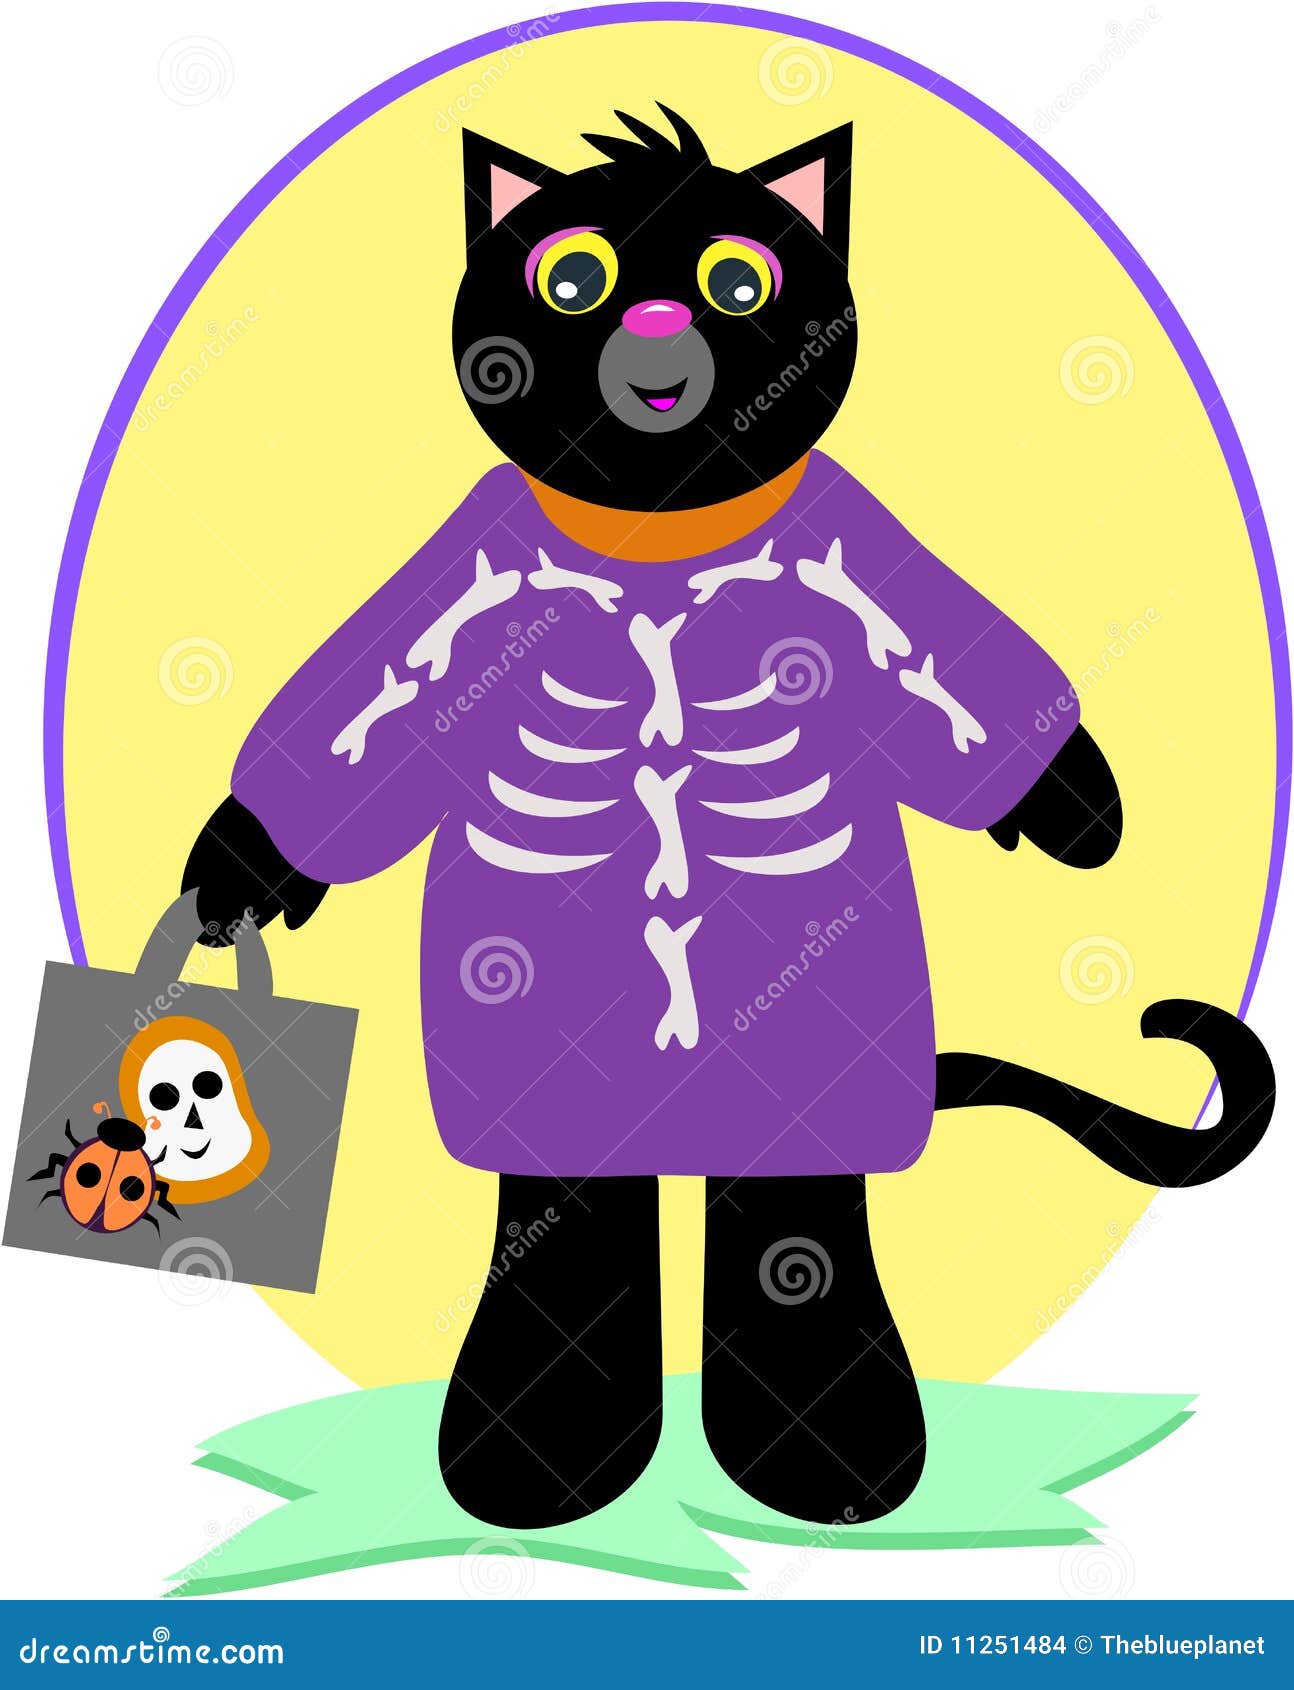 Esqueleto gato preto silhueta gato de halloween com traje de ossos cat  skull icon logo halloween